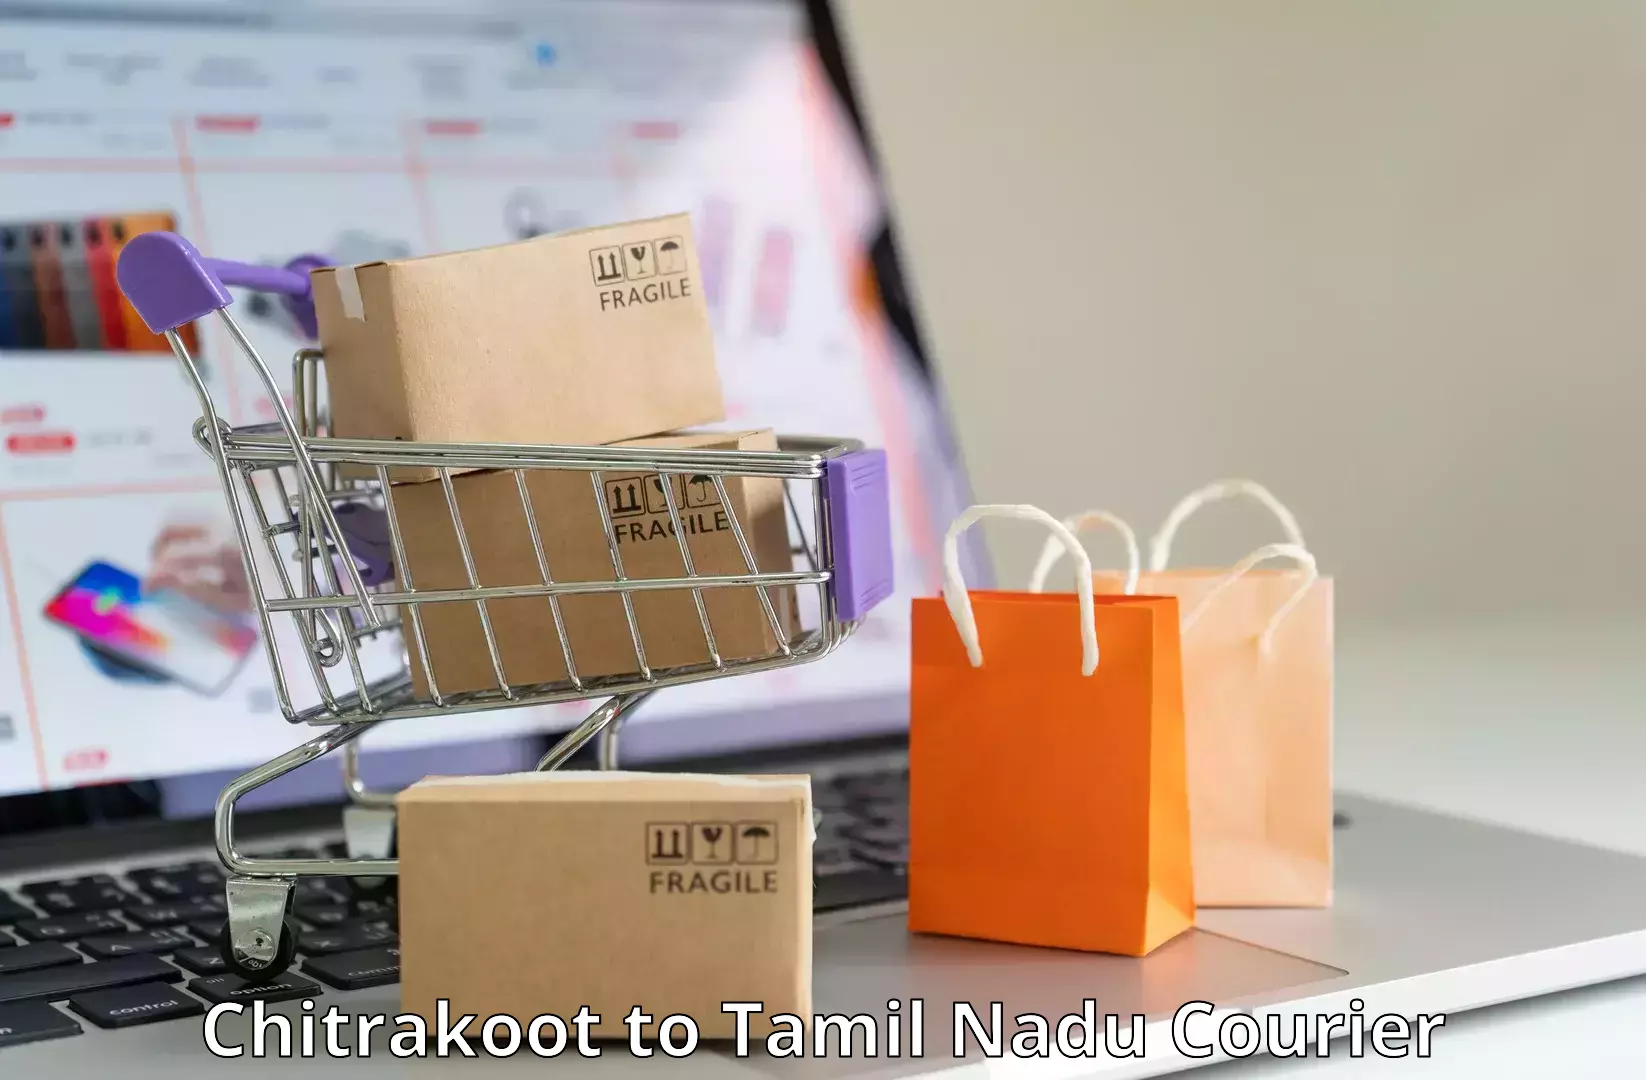 Fast shipping solutions Chitrakoot to Thiruthuraipoondi